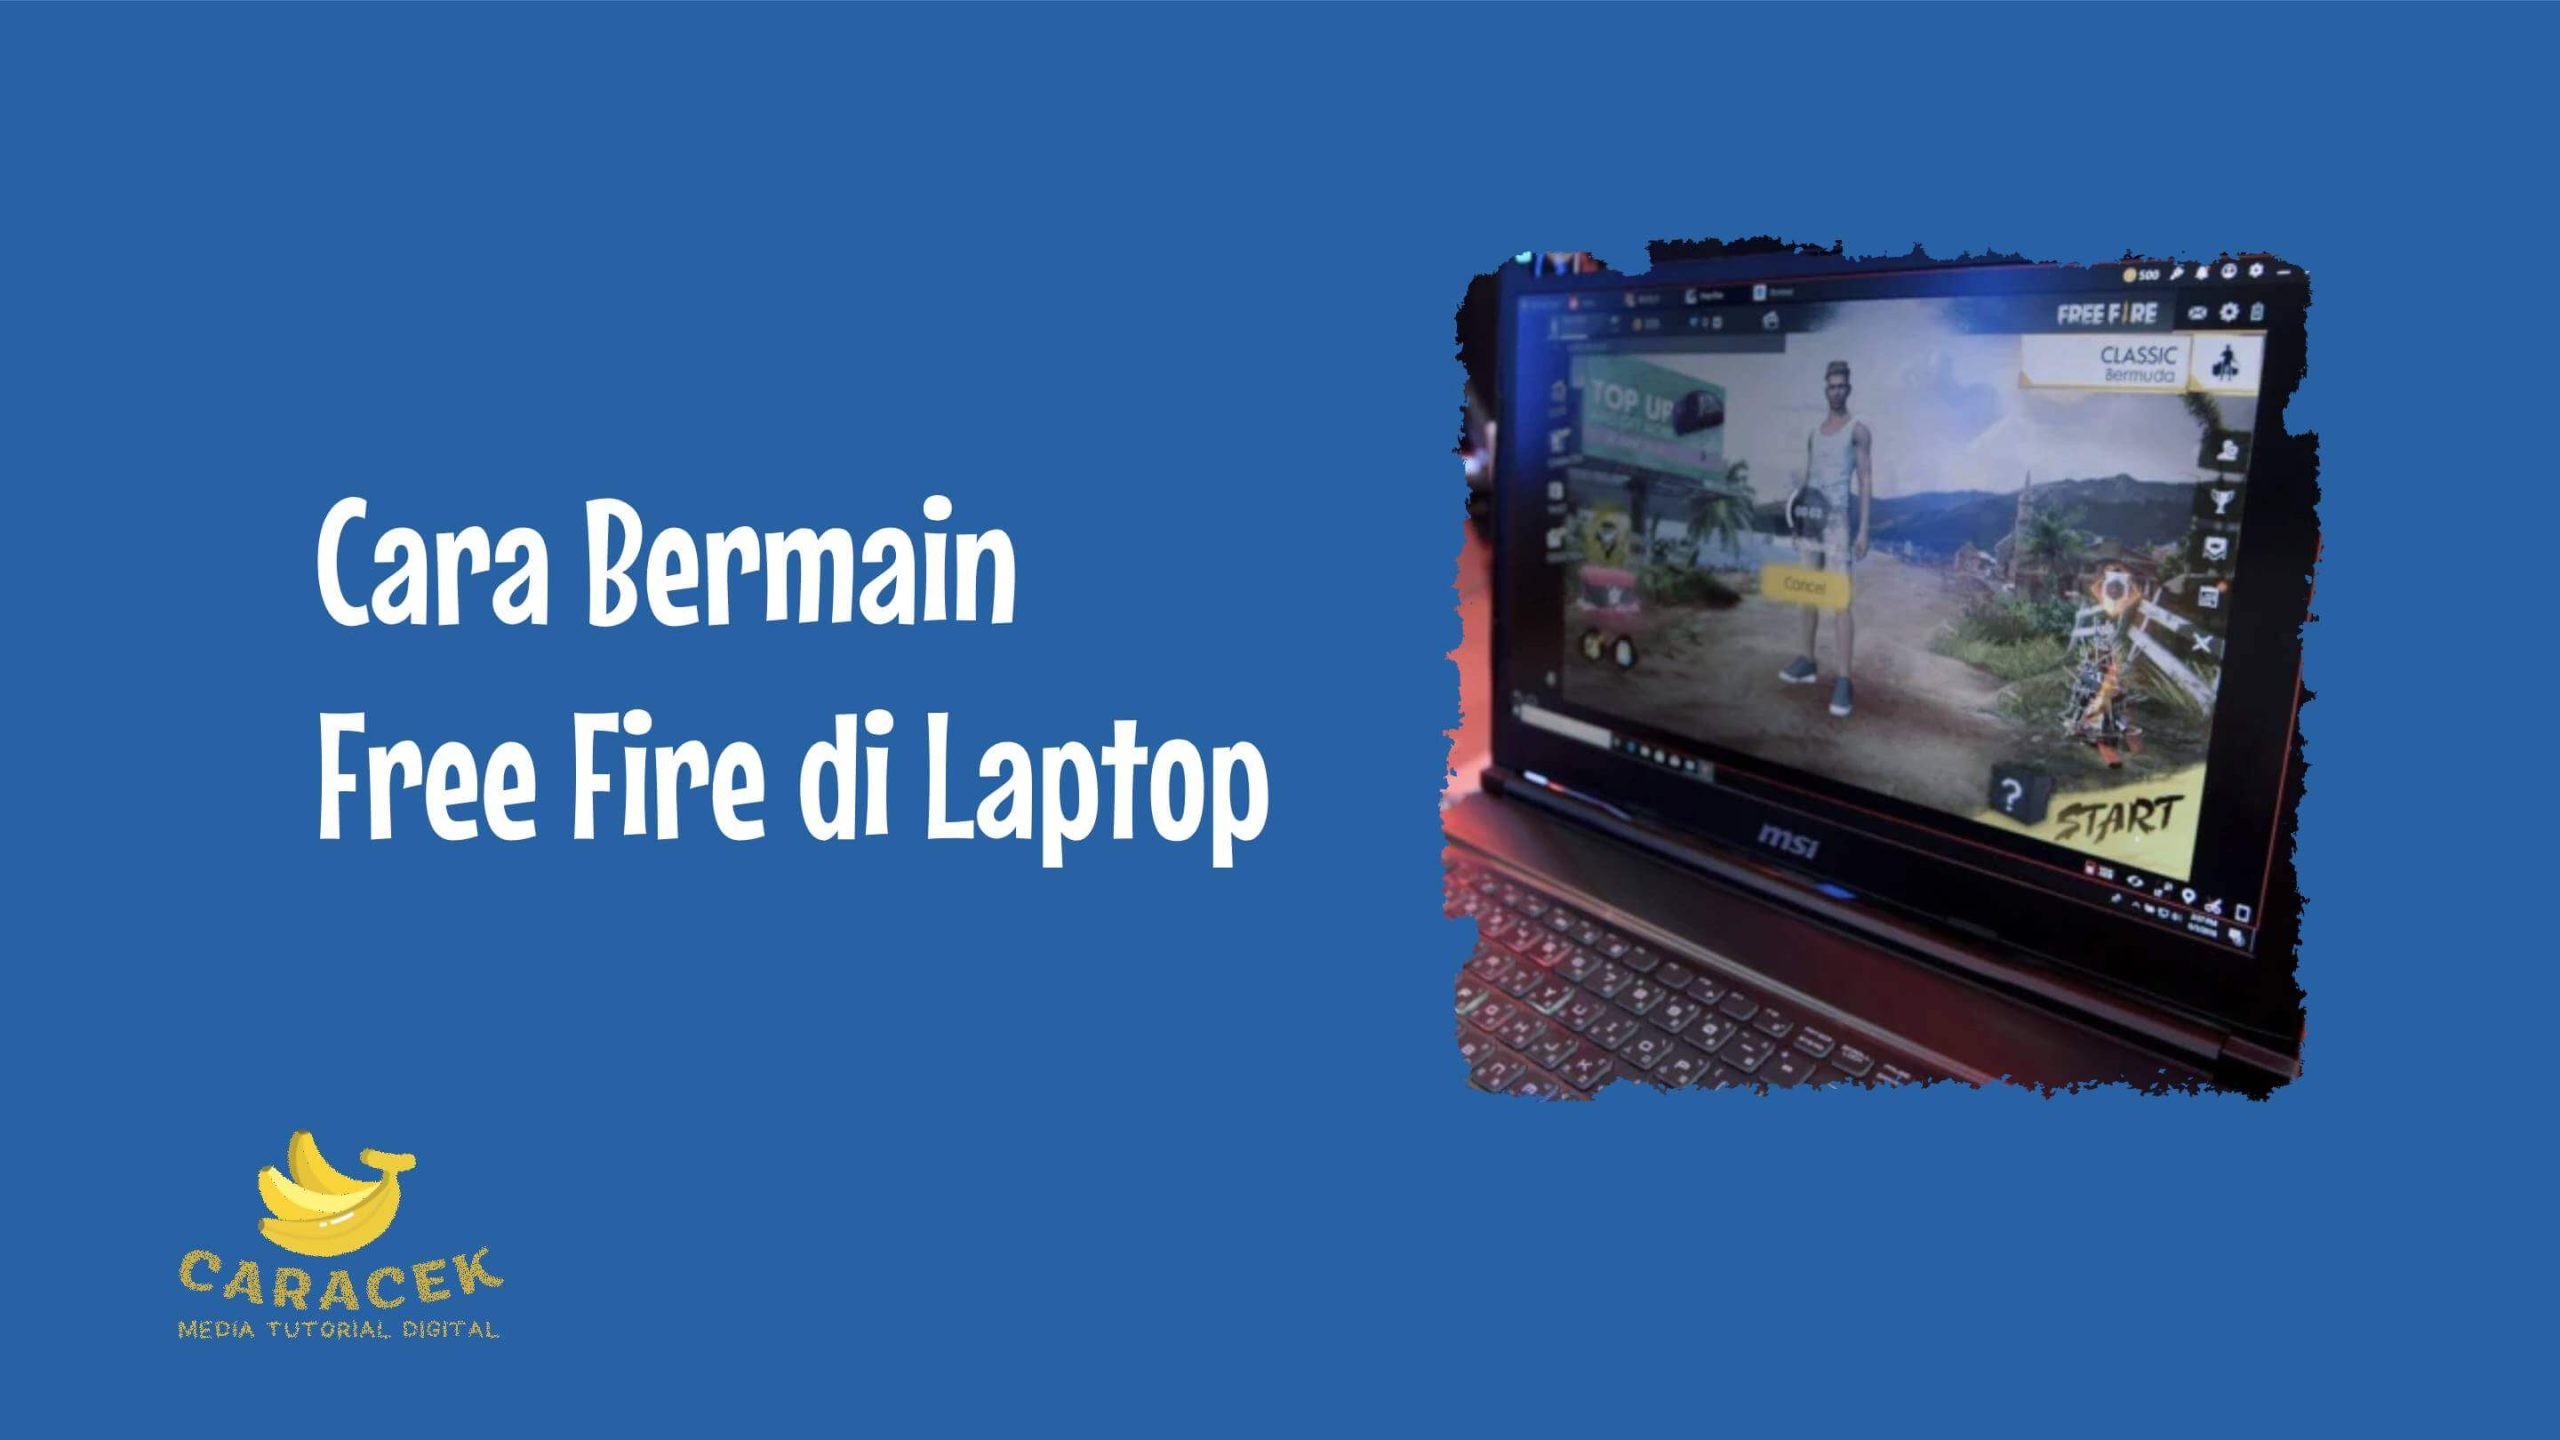 Cara Bermain Free Fire di Laptop